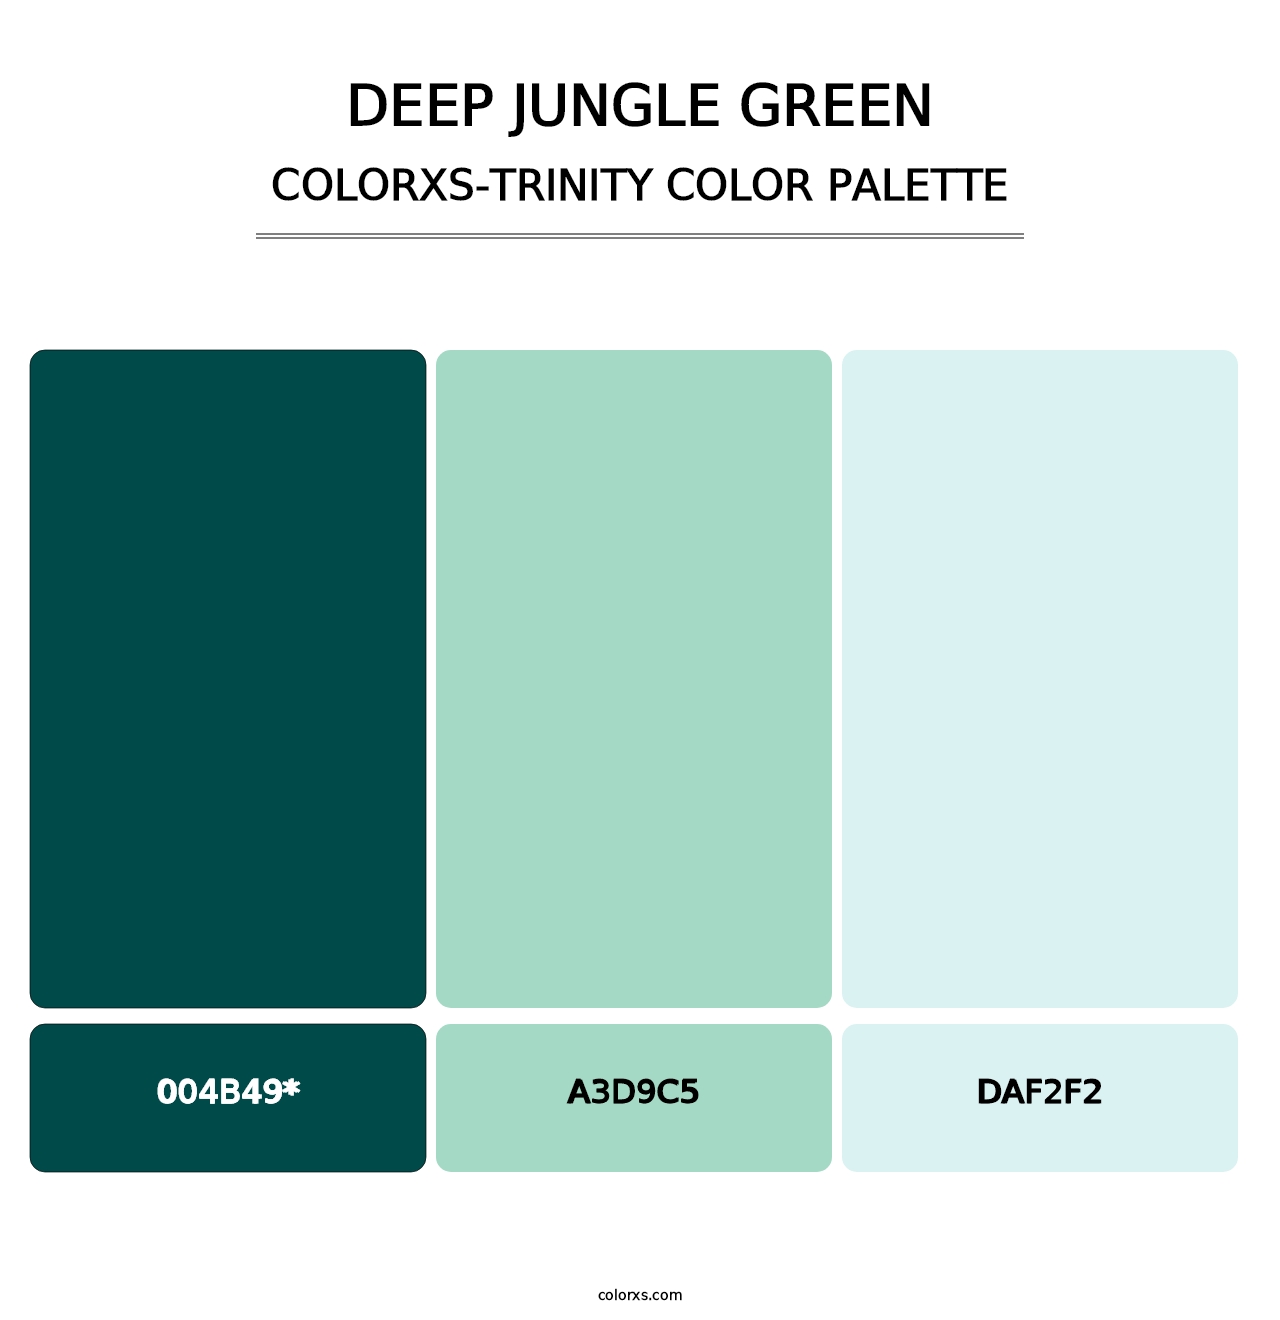 Deep Jungle Green - Colorxs Trinity Palette